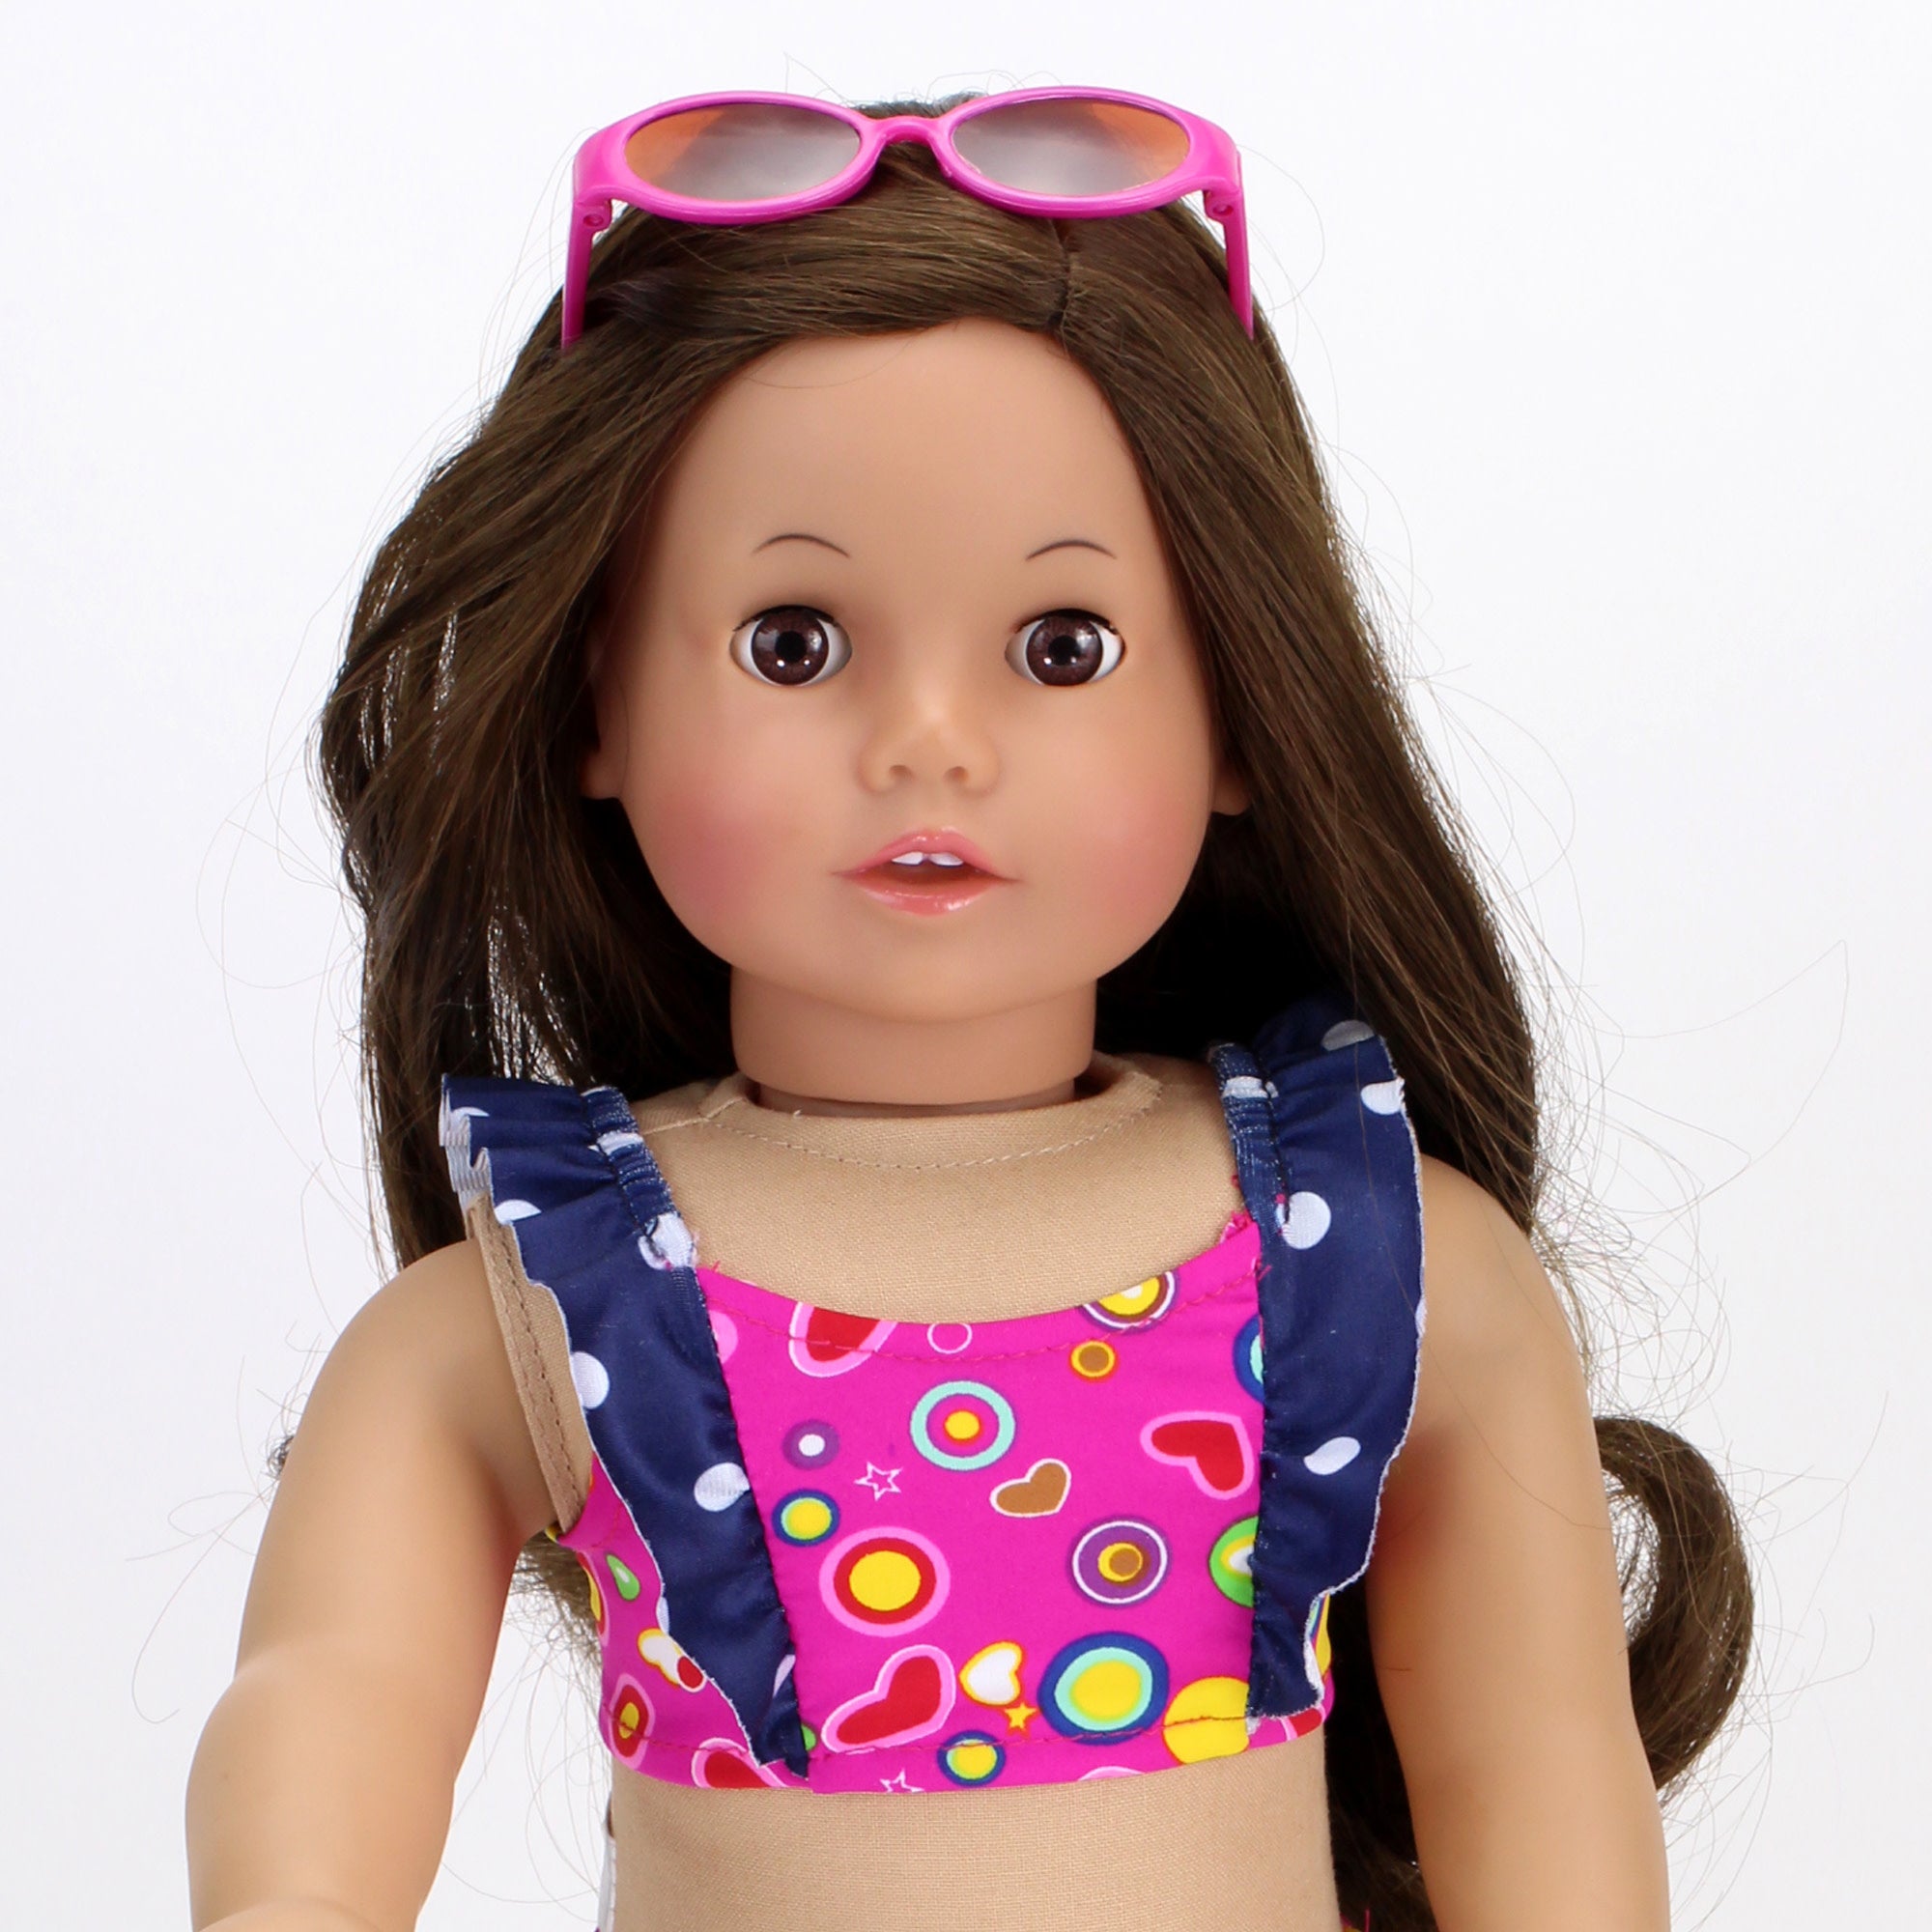 Sophia's - 18" Doll - Swimsuit & Sunglasses - Hot Pink